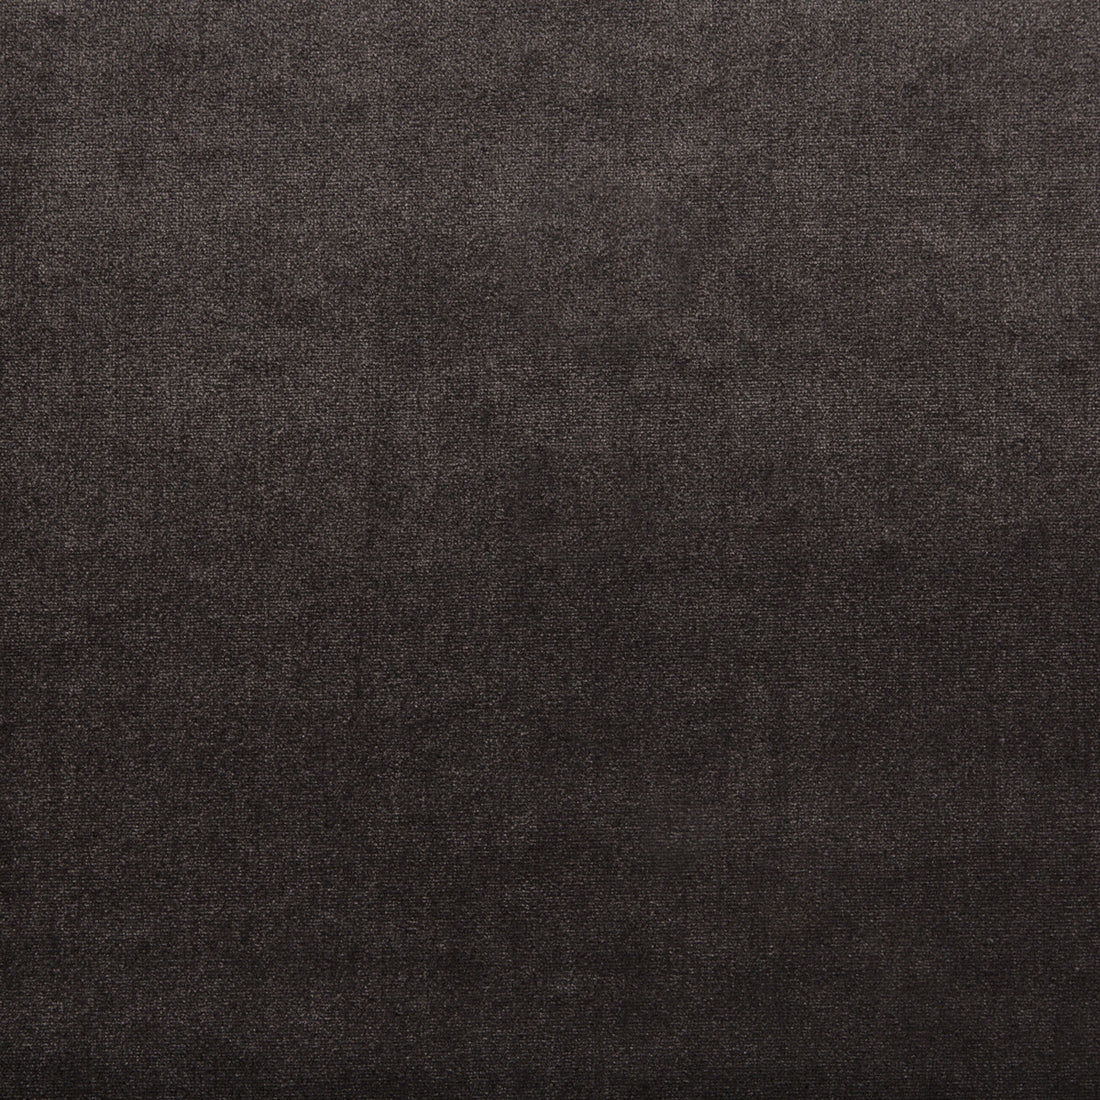 Duchess Velvet fabric in espresso color - pattern 2016121.68.0 - by Lee Jofa